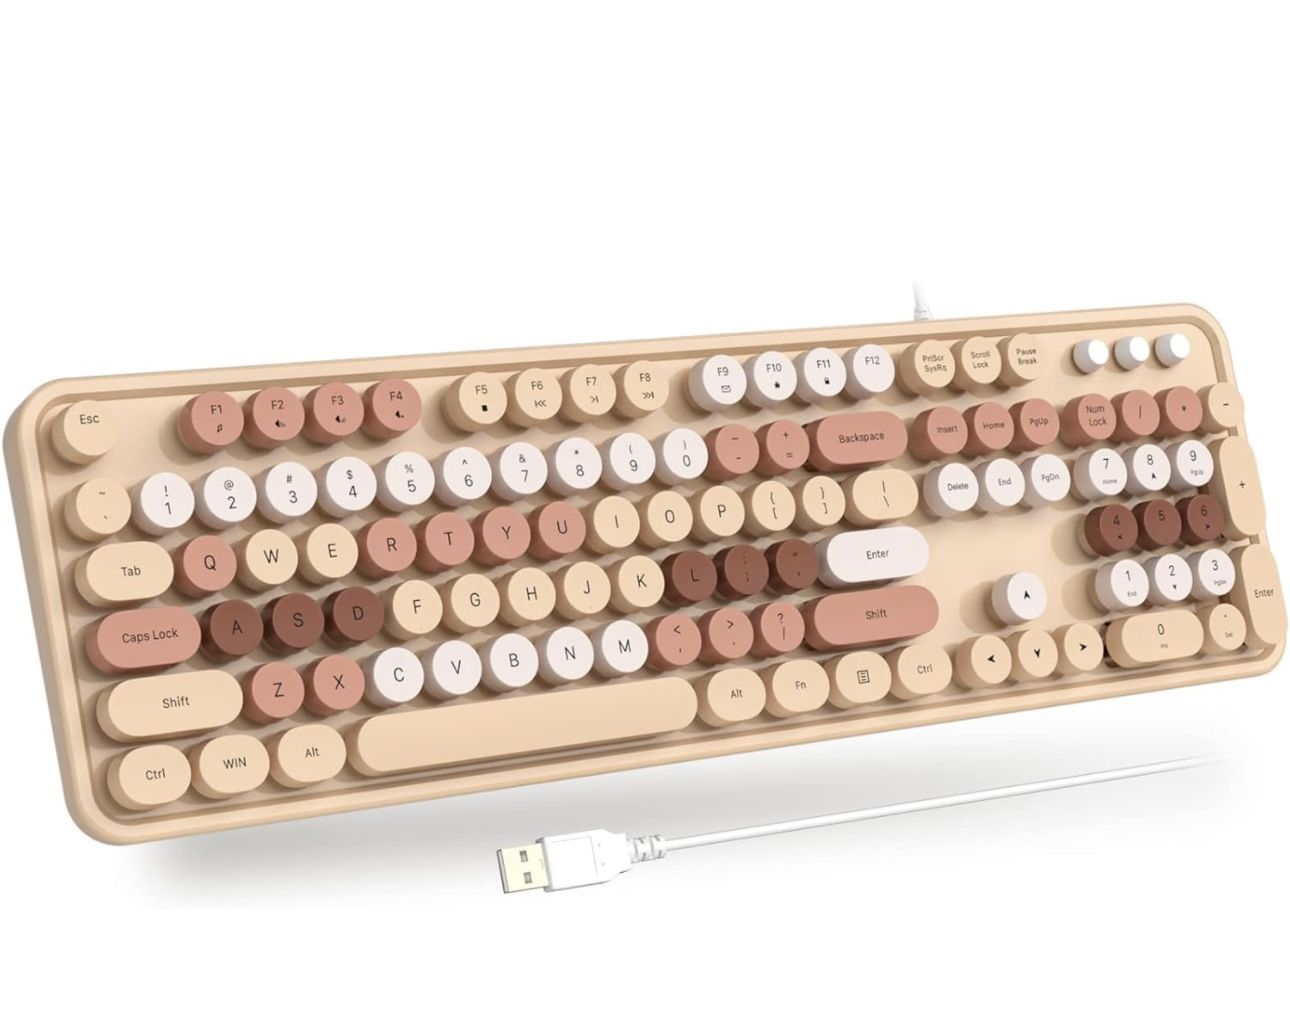 Computer Wired USB Keyboard - Milk Tea Full-Size Round Keycaps Retro Typewriter Keyboards, for Windows, PC, Laptop, Desktop, Mac